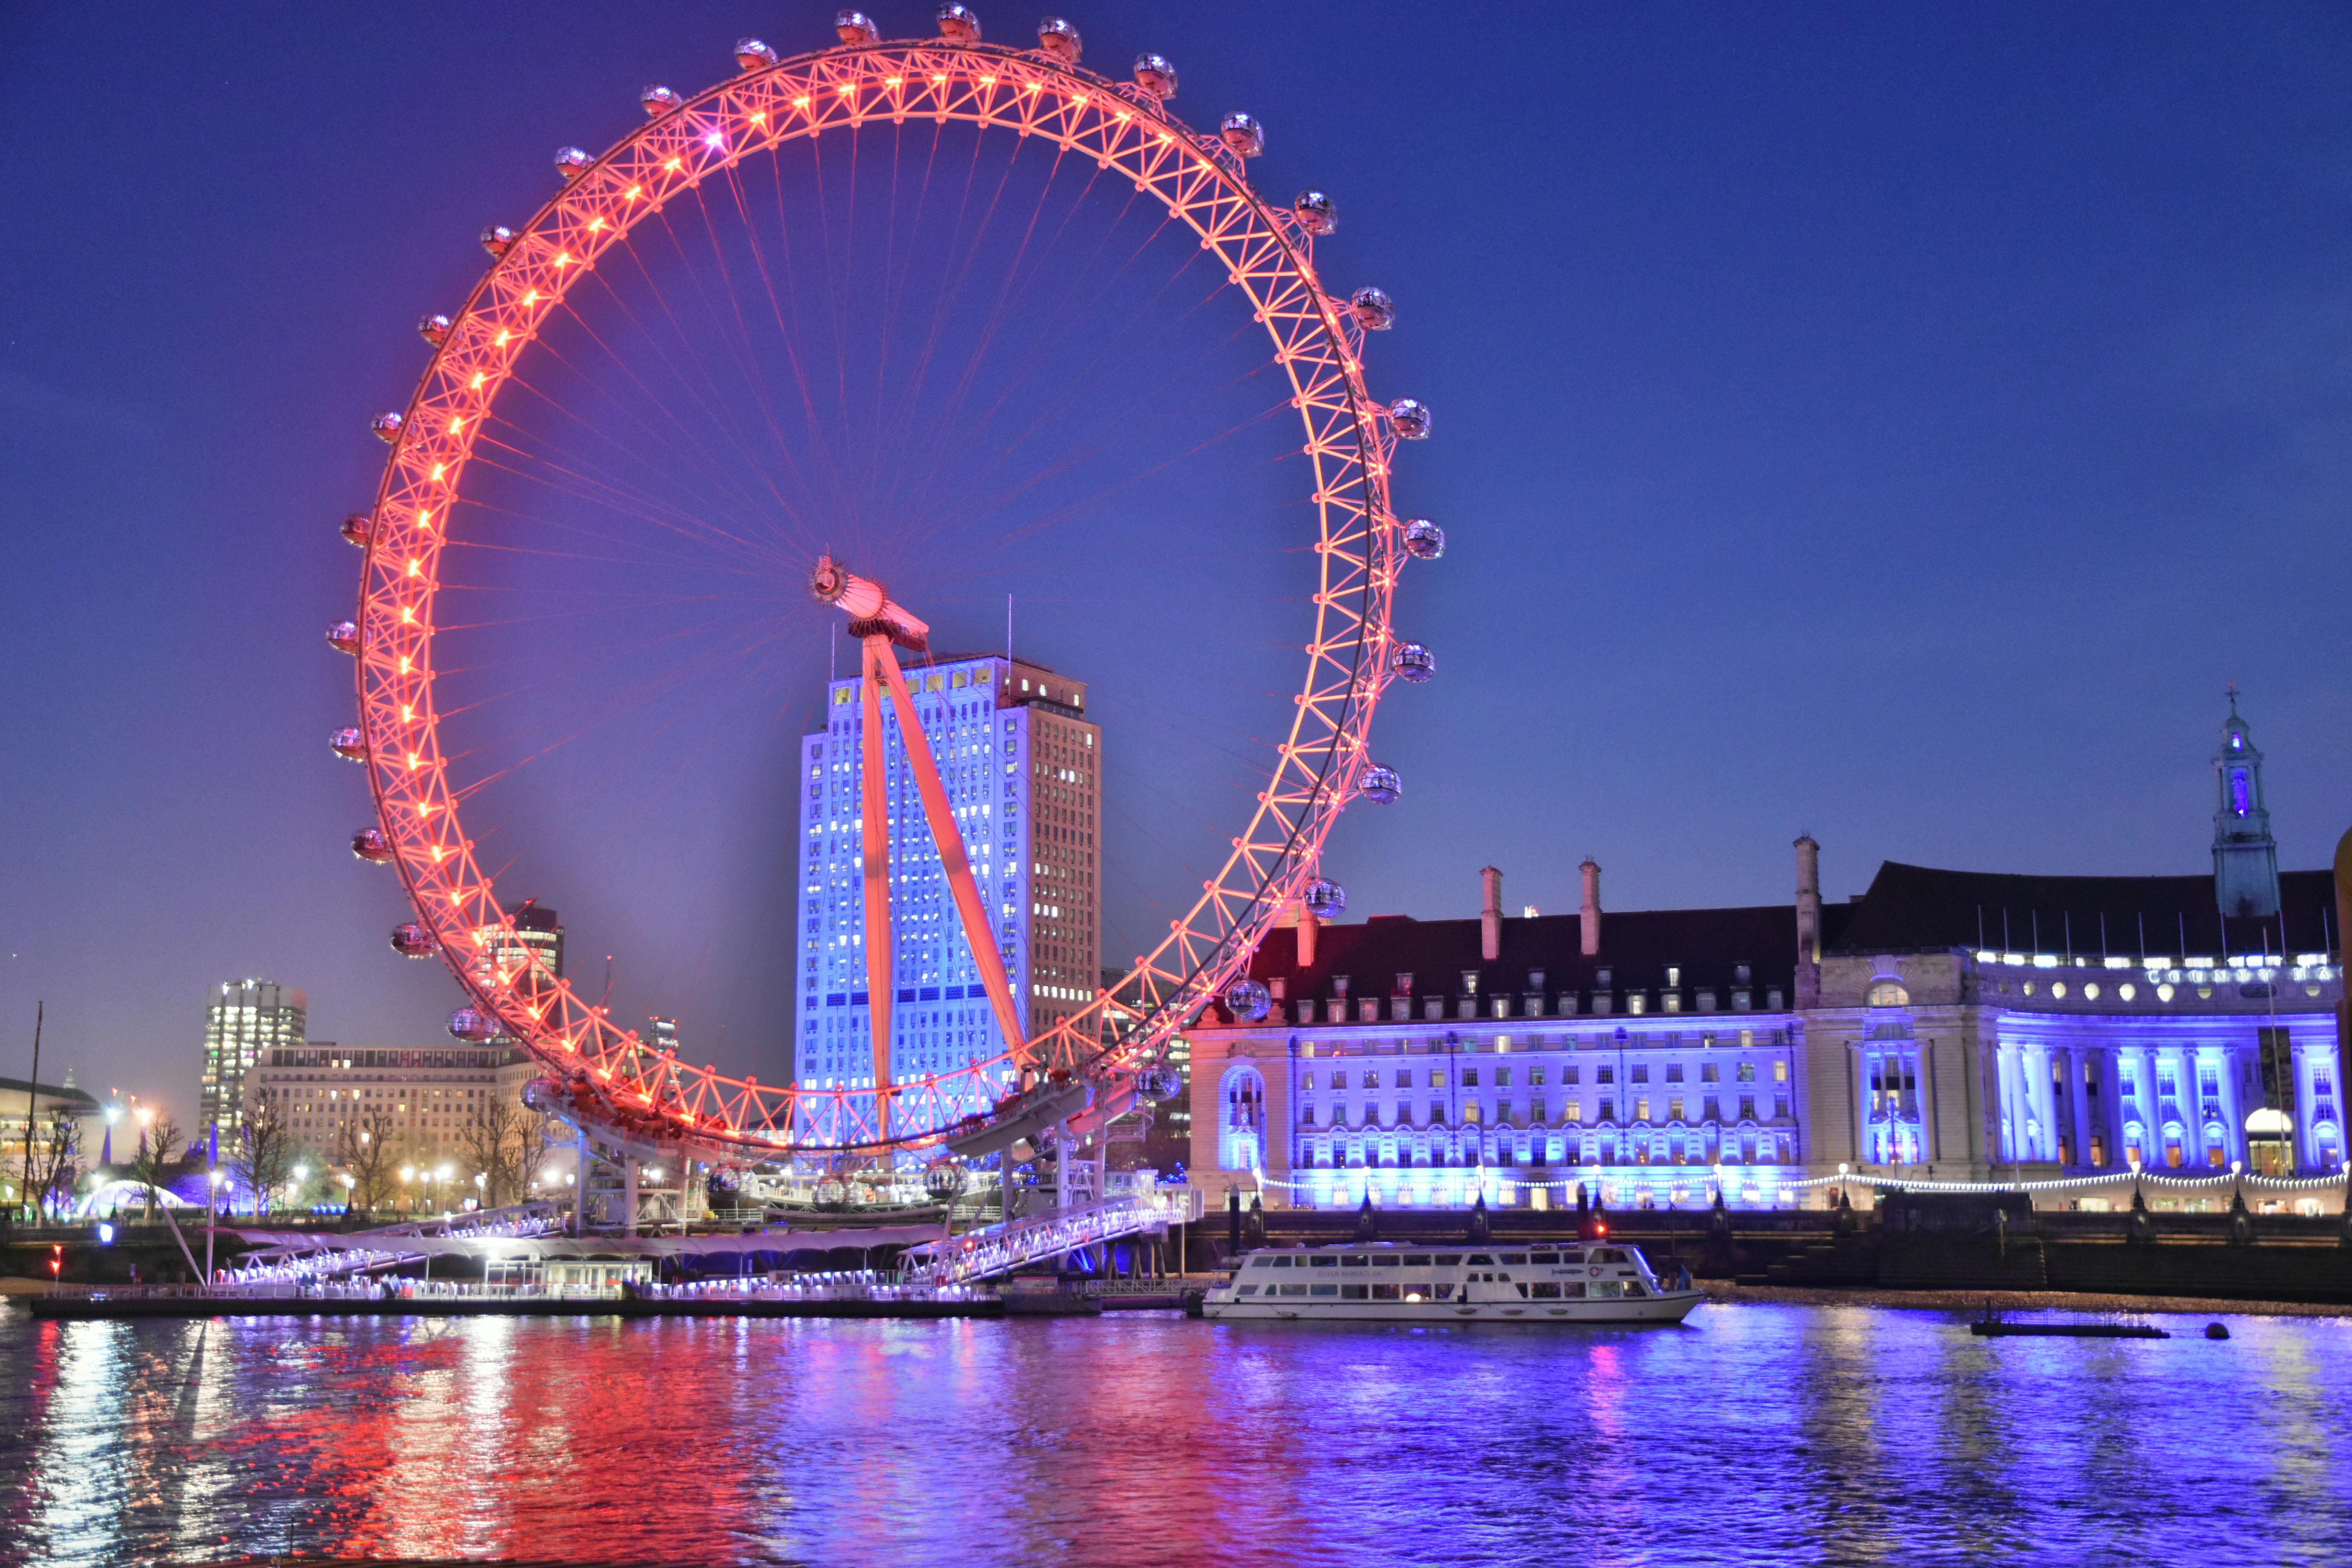 Free stock photo of london eye, night photography - 6000 x 4000 jpeg 3657kB